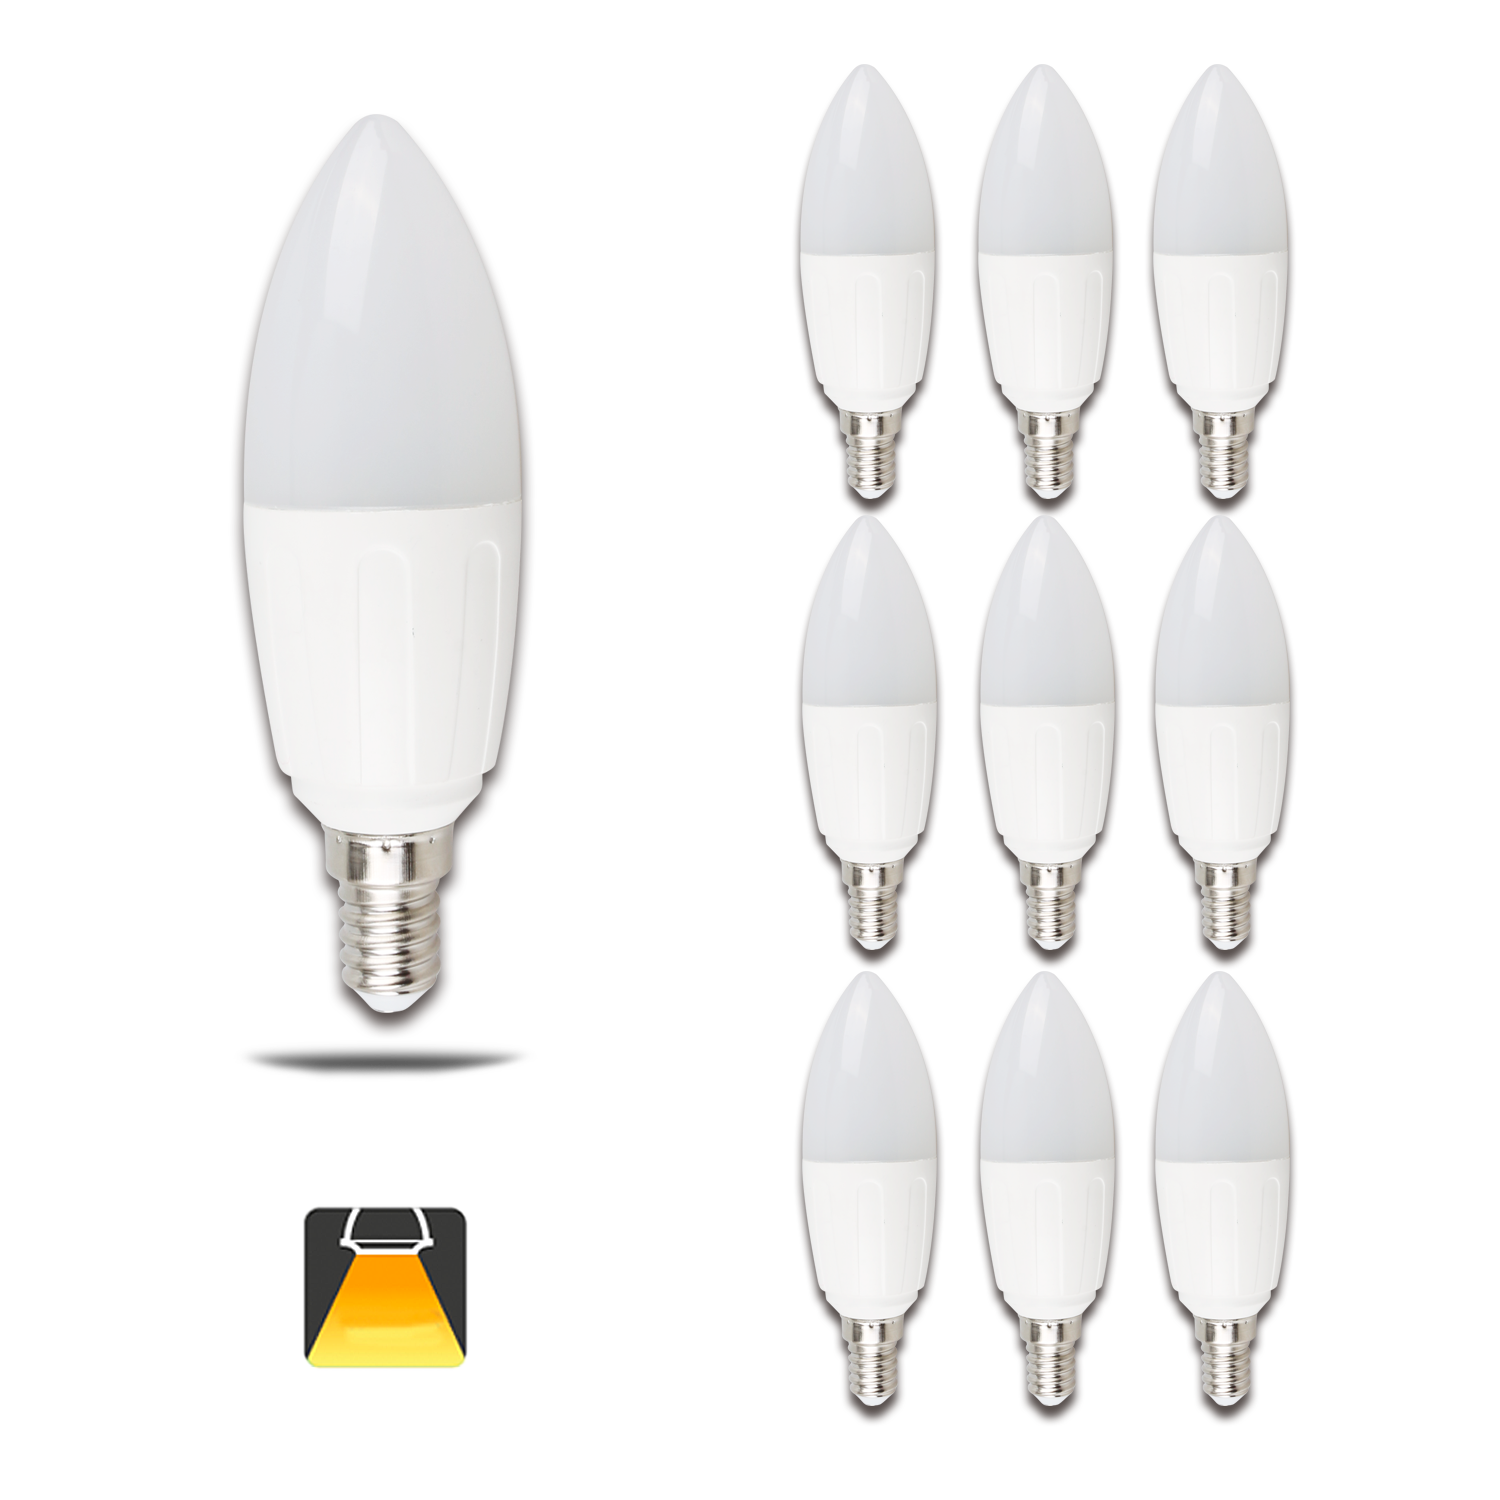 Aigostar -Pack de 10 bombillas led c37 vela, 9w equivalente a 65W ,casquillo delgado E14,no regulable , Luz calida 3000k ,675lm  [Clase de eficiencia energética A+]